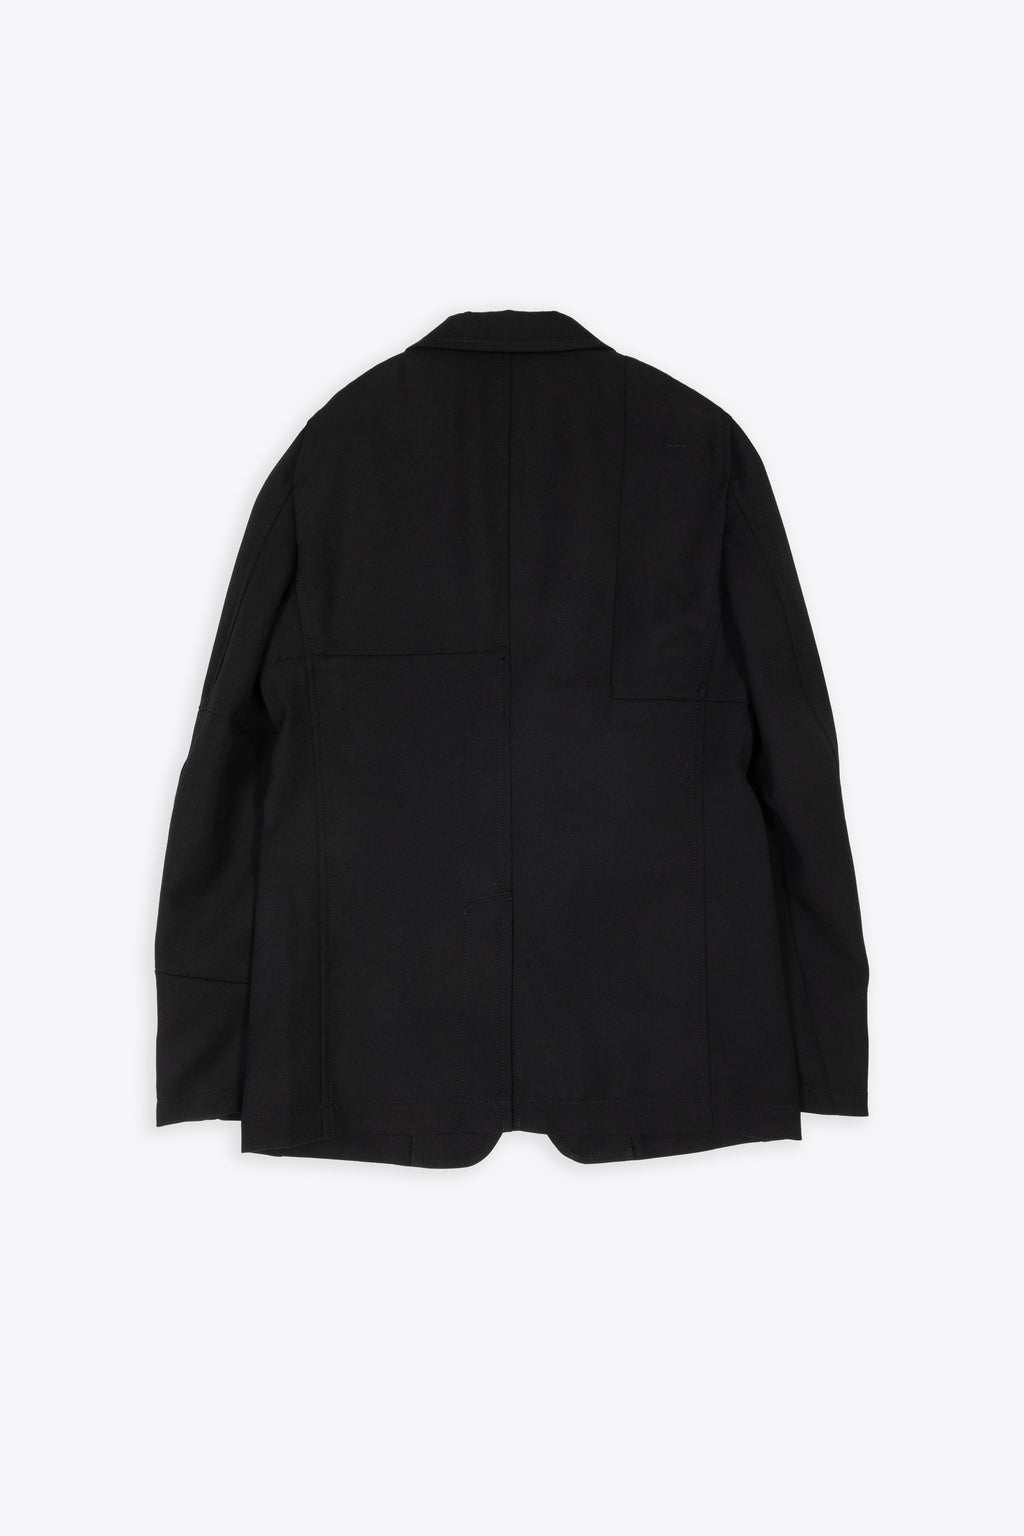 alt-image__Black-wool-patchwork-blazer-with-peak-lapel